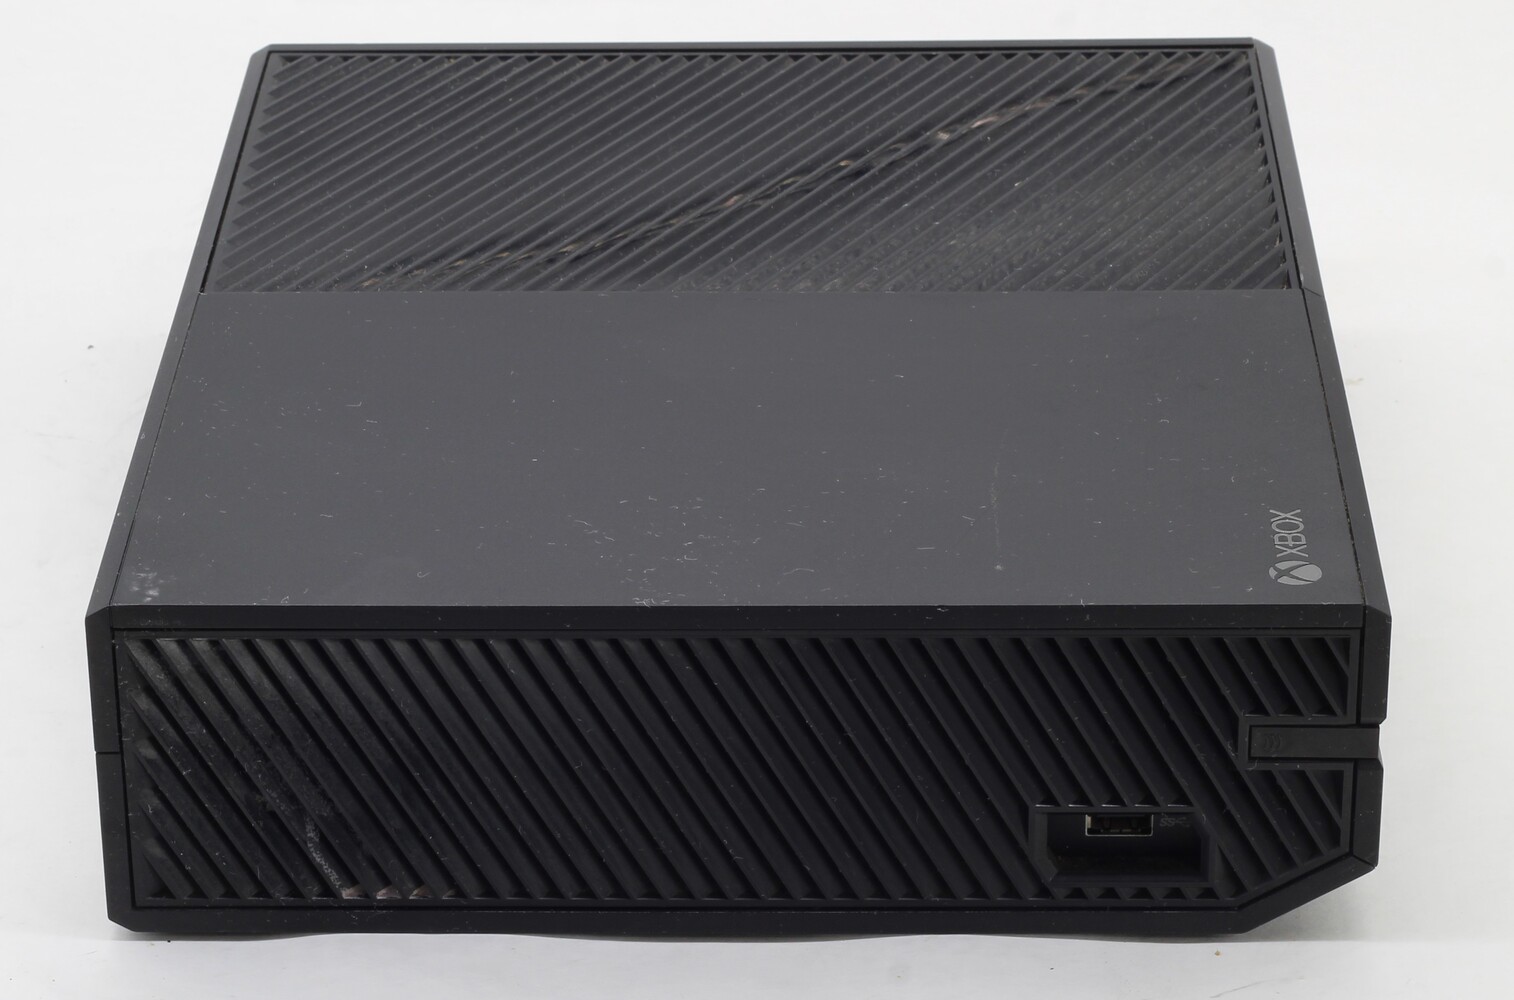 Microsoft Original XBOX One 1TB 1540 Console w/ Controller Power Brick HDMI